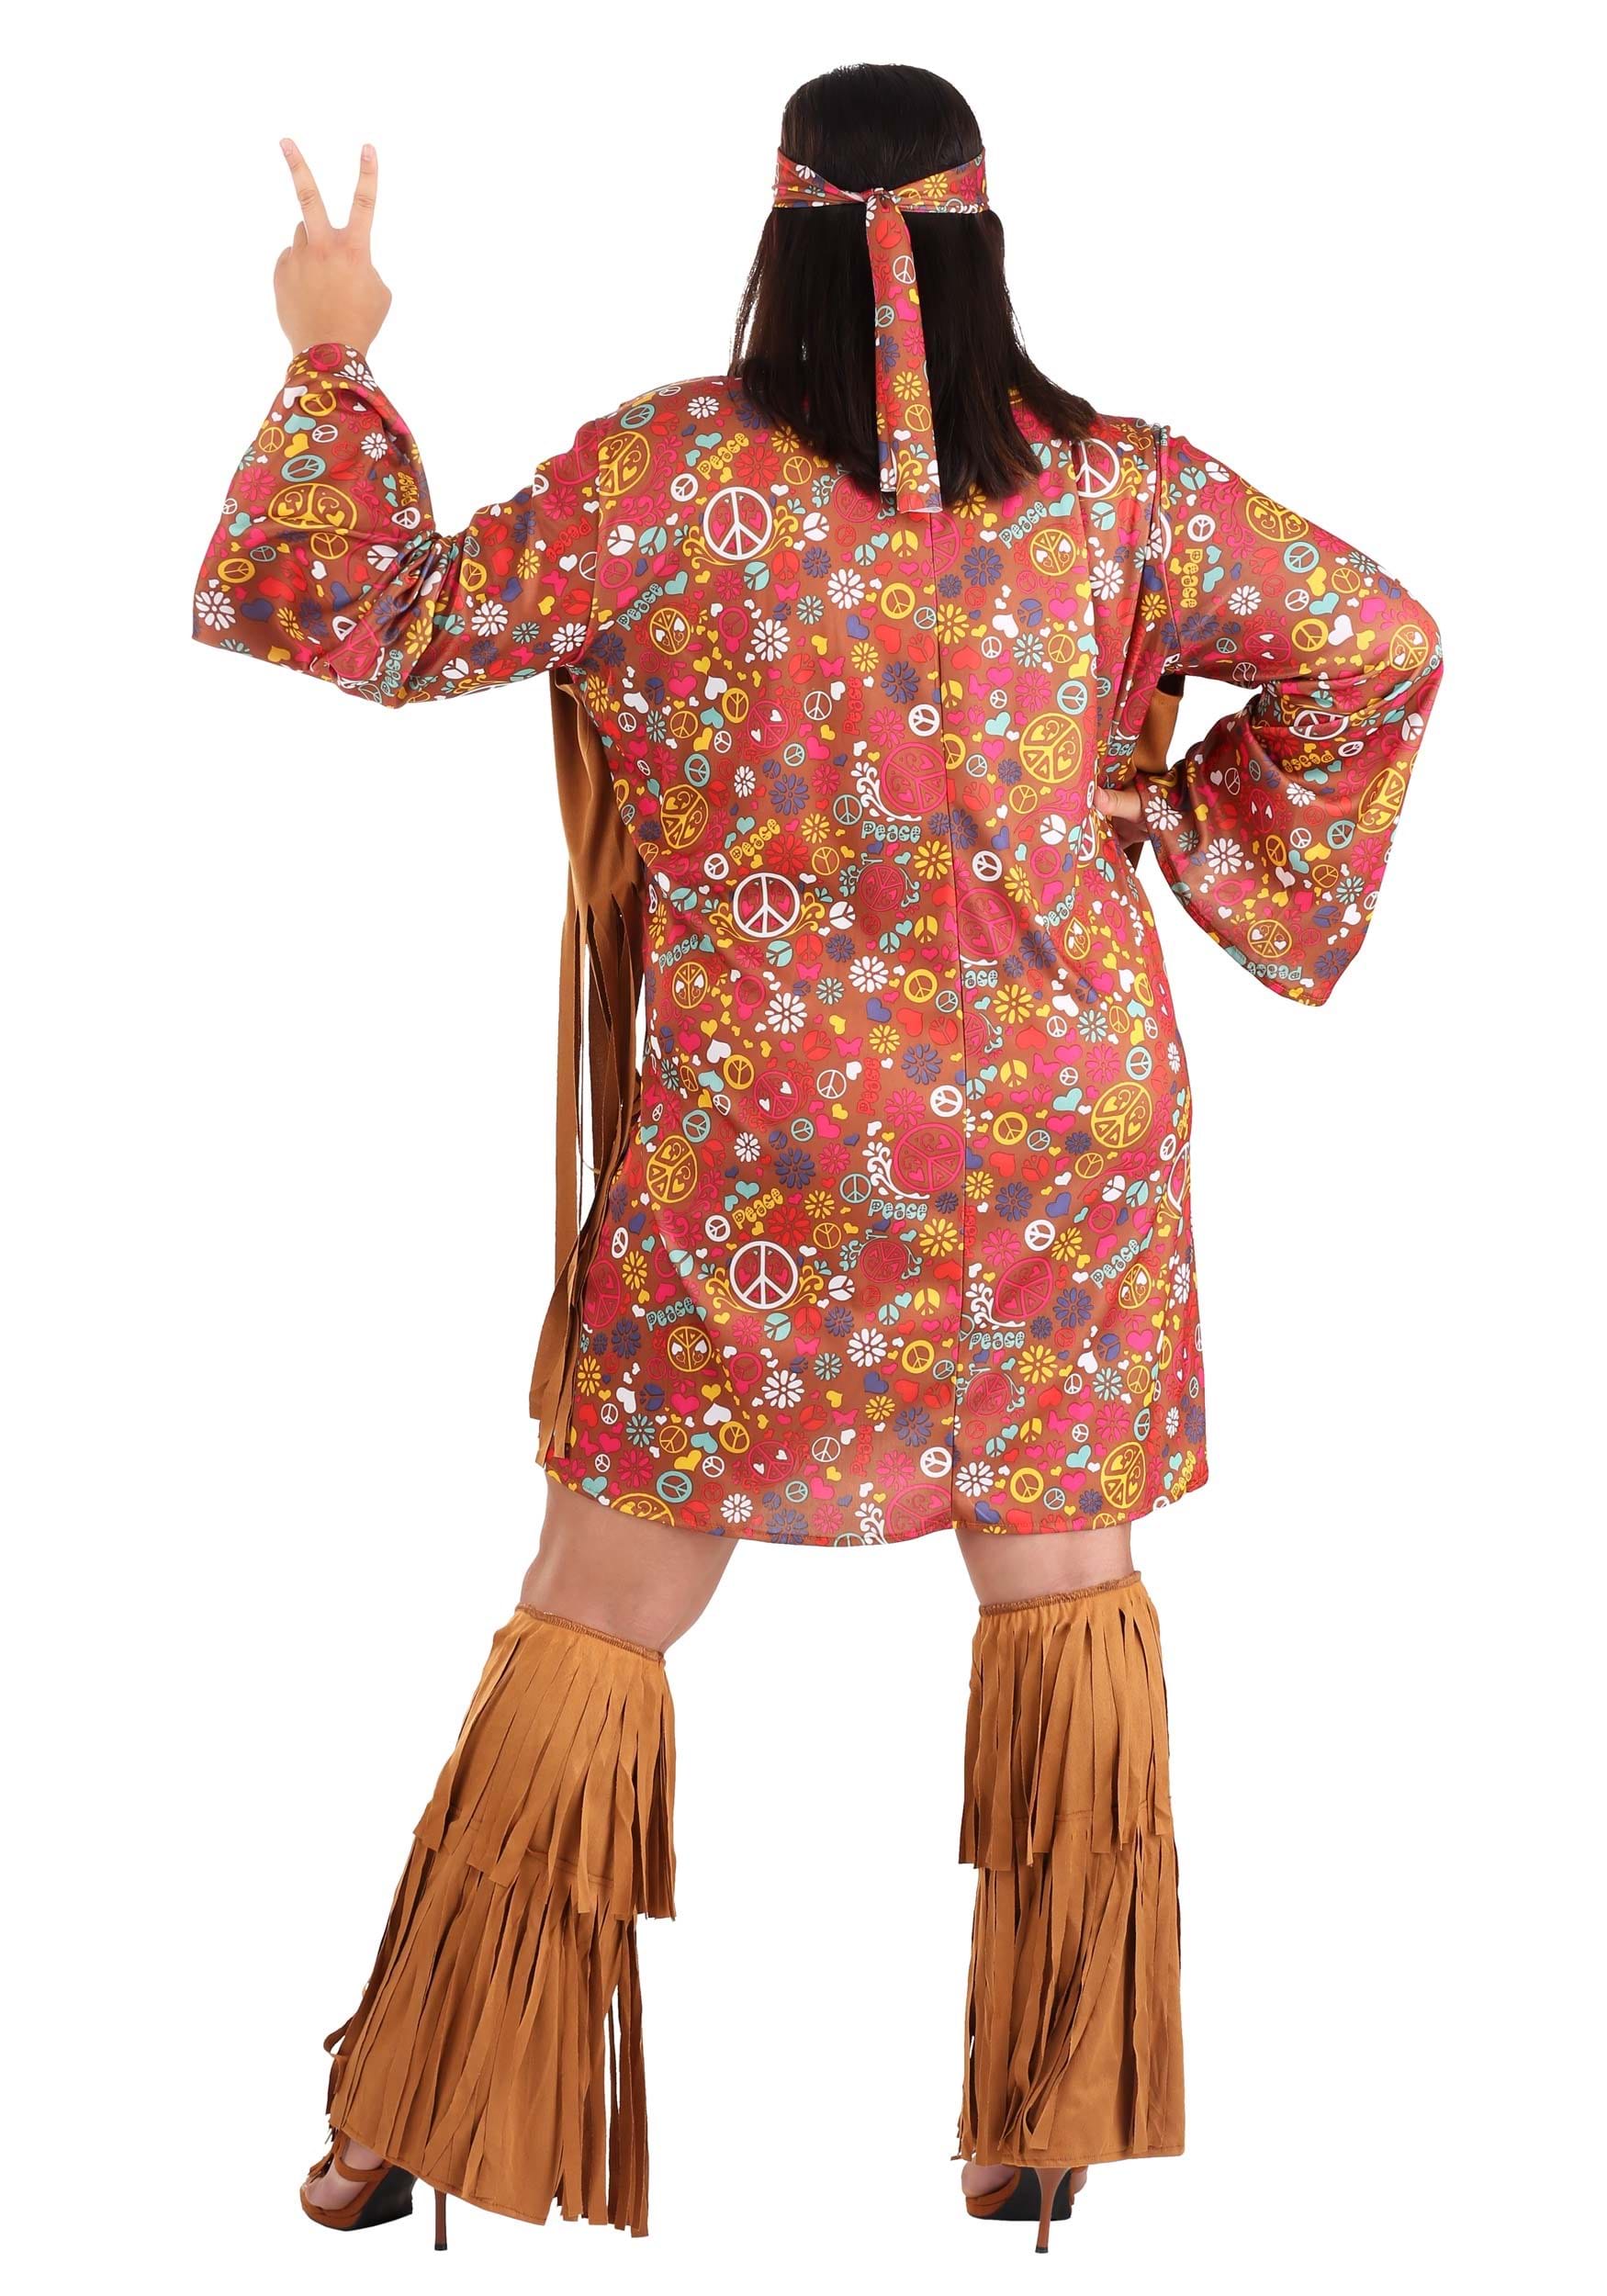 Plus Size & Love Costume | Hippie Plus Size Costume